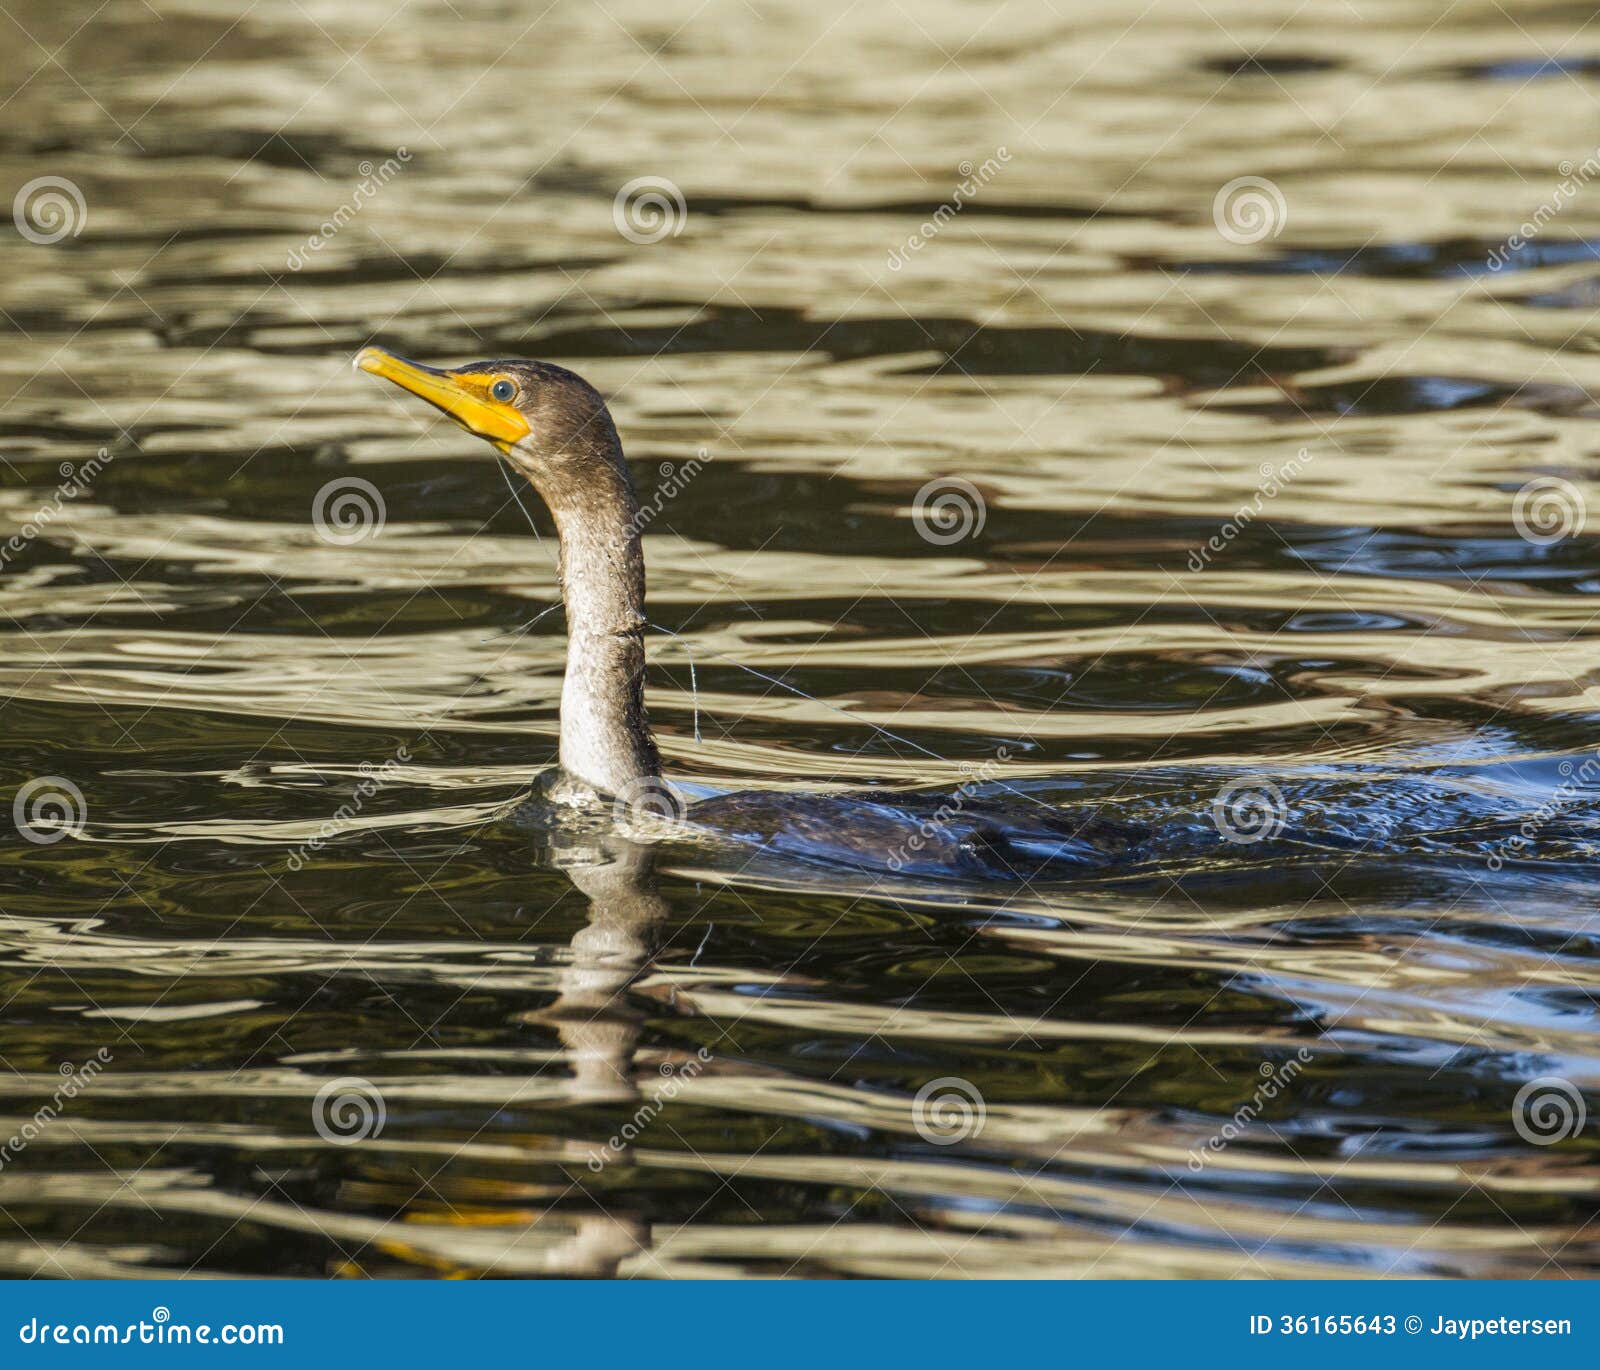 https://thumbs.dreamstime.com/z/cormorant-tangled-fishing-line-photo-taken-connecticut-river-36165643.jpg